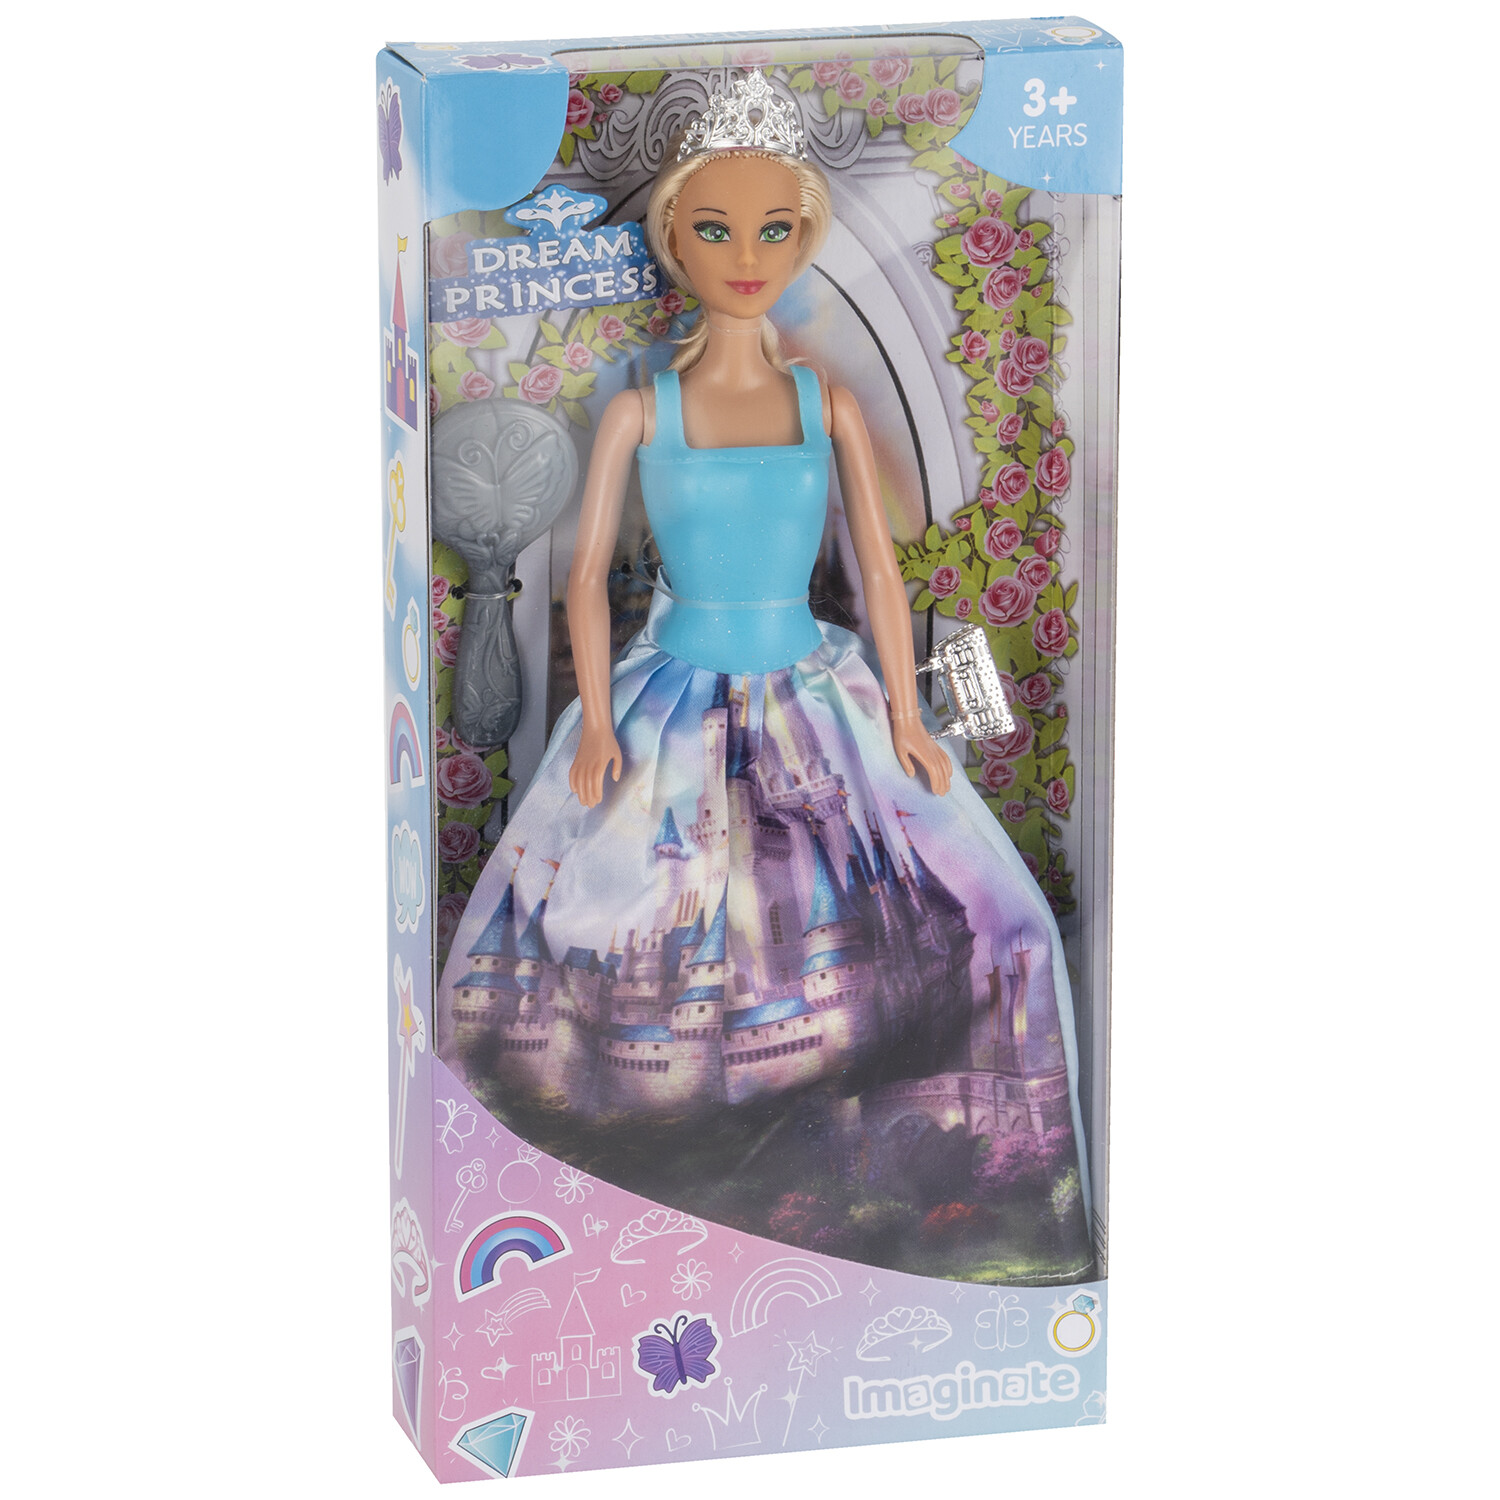 Imaginate Dream Princess Doll Image 2